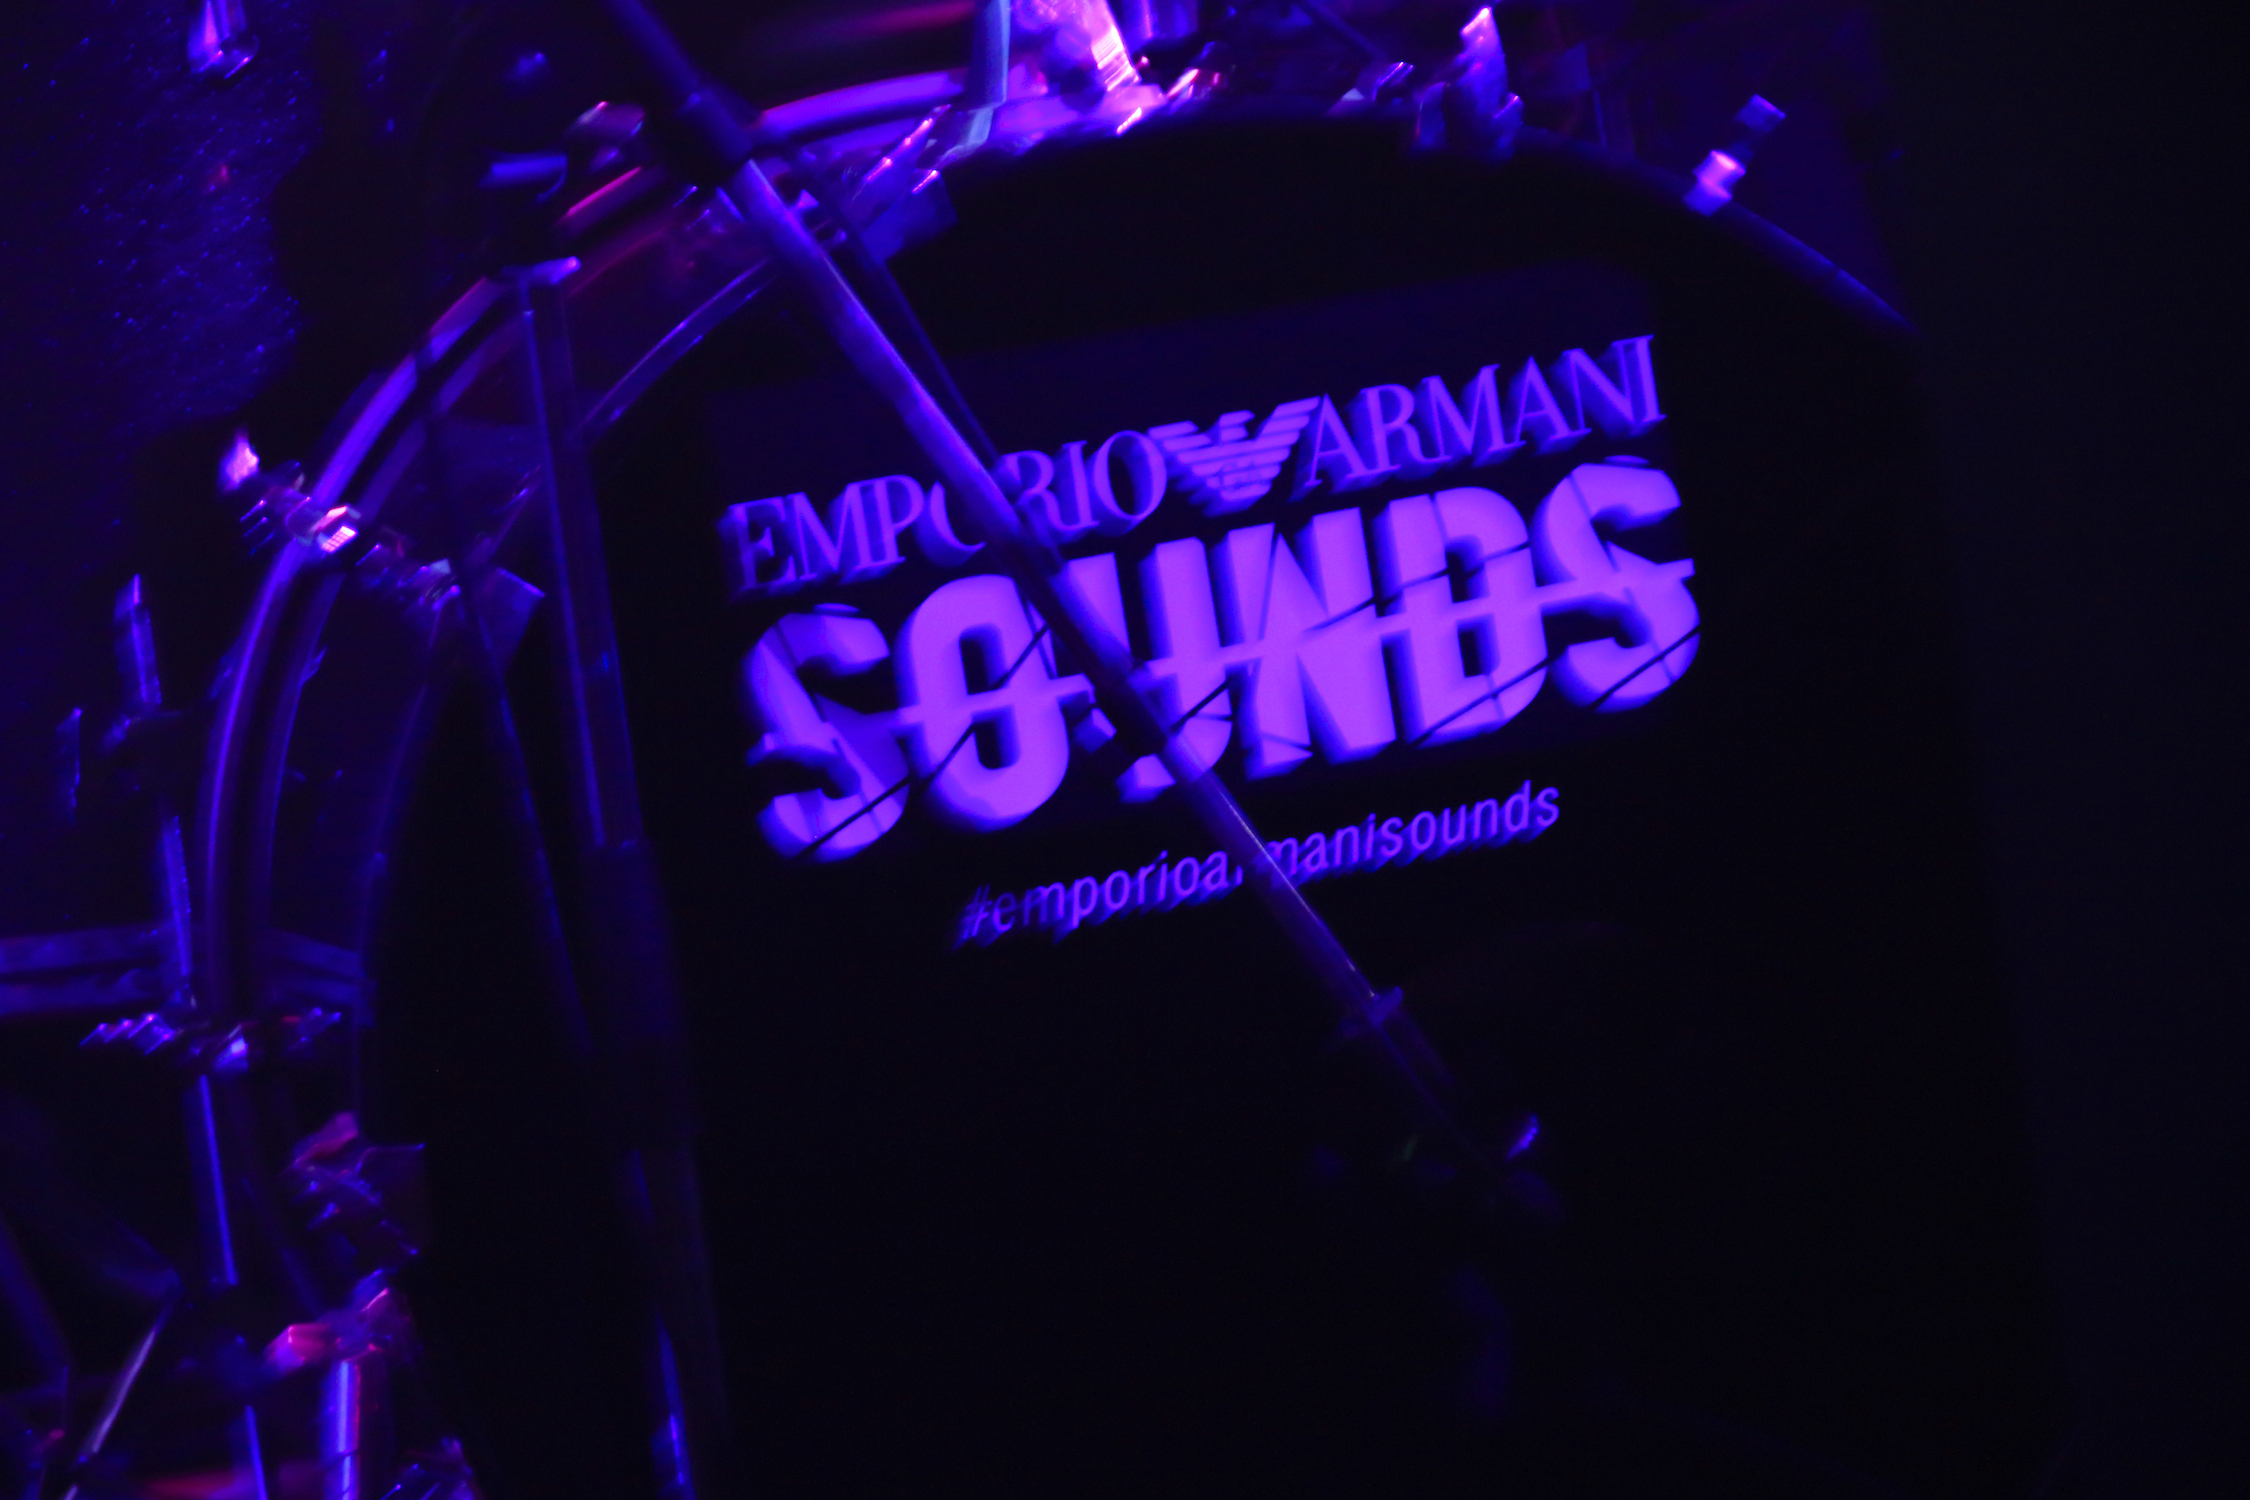 EMPORIO ARMANI SOUNDS_2015_22